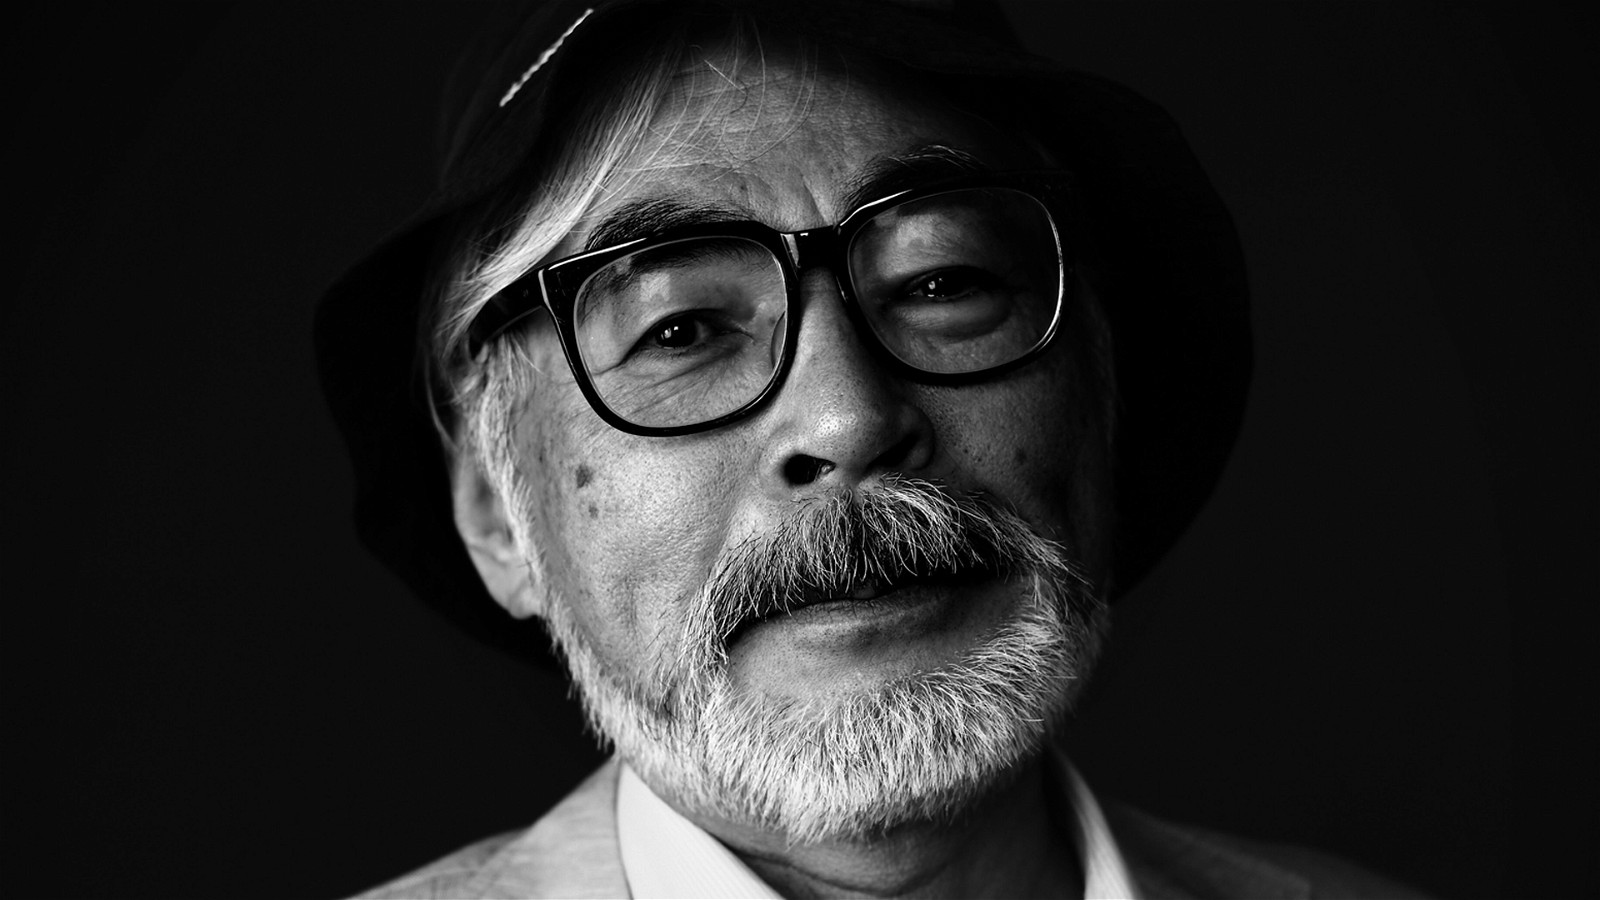 Guillermo del Toro praised Hayao Miyazaki